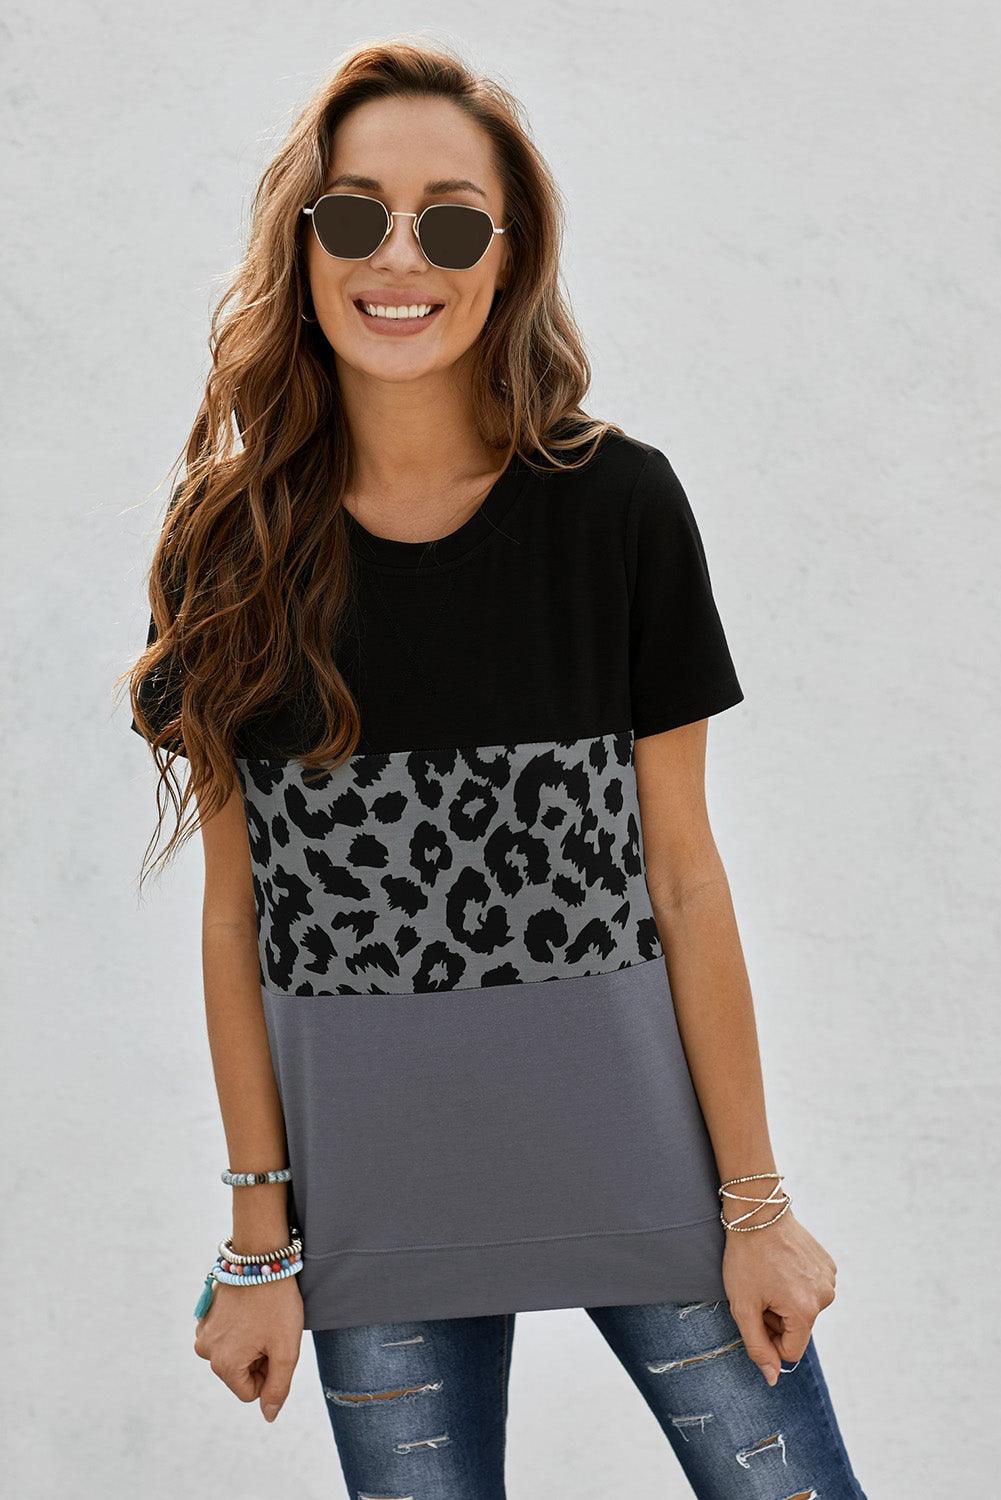 Leopard Print Color Block Short Sleeve T-Shirt - BELLATRENDZ